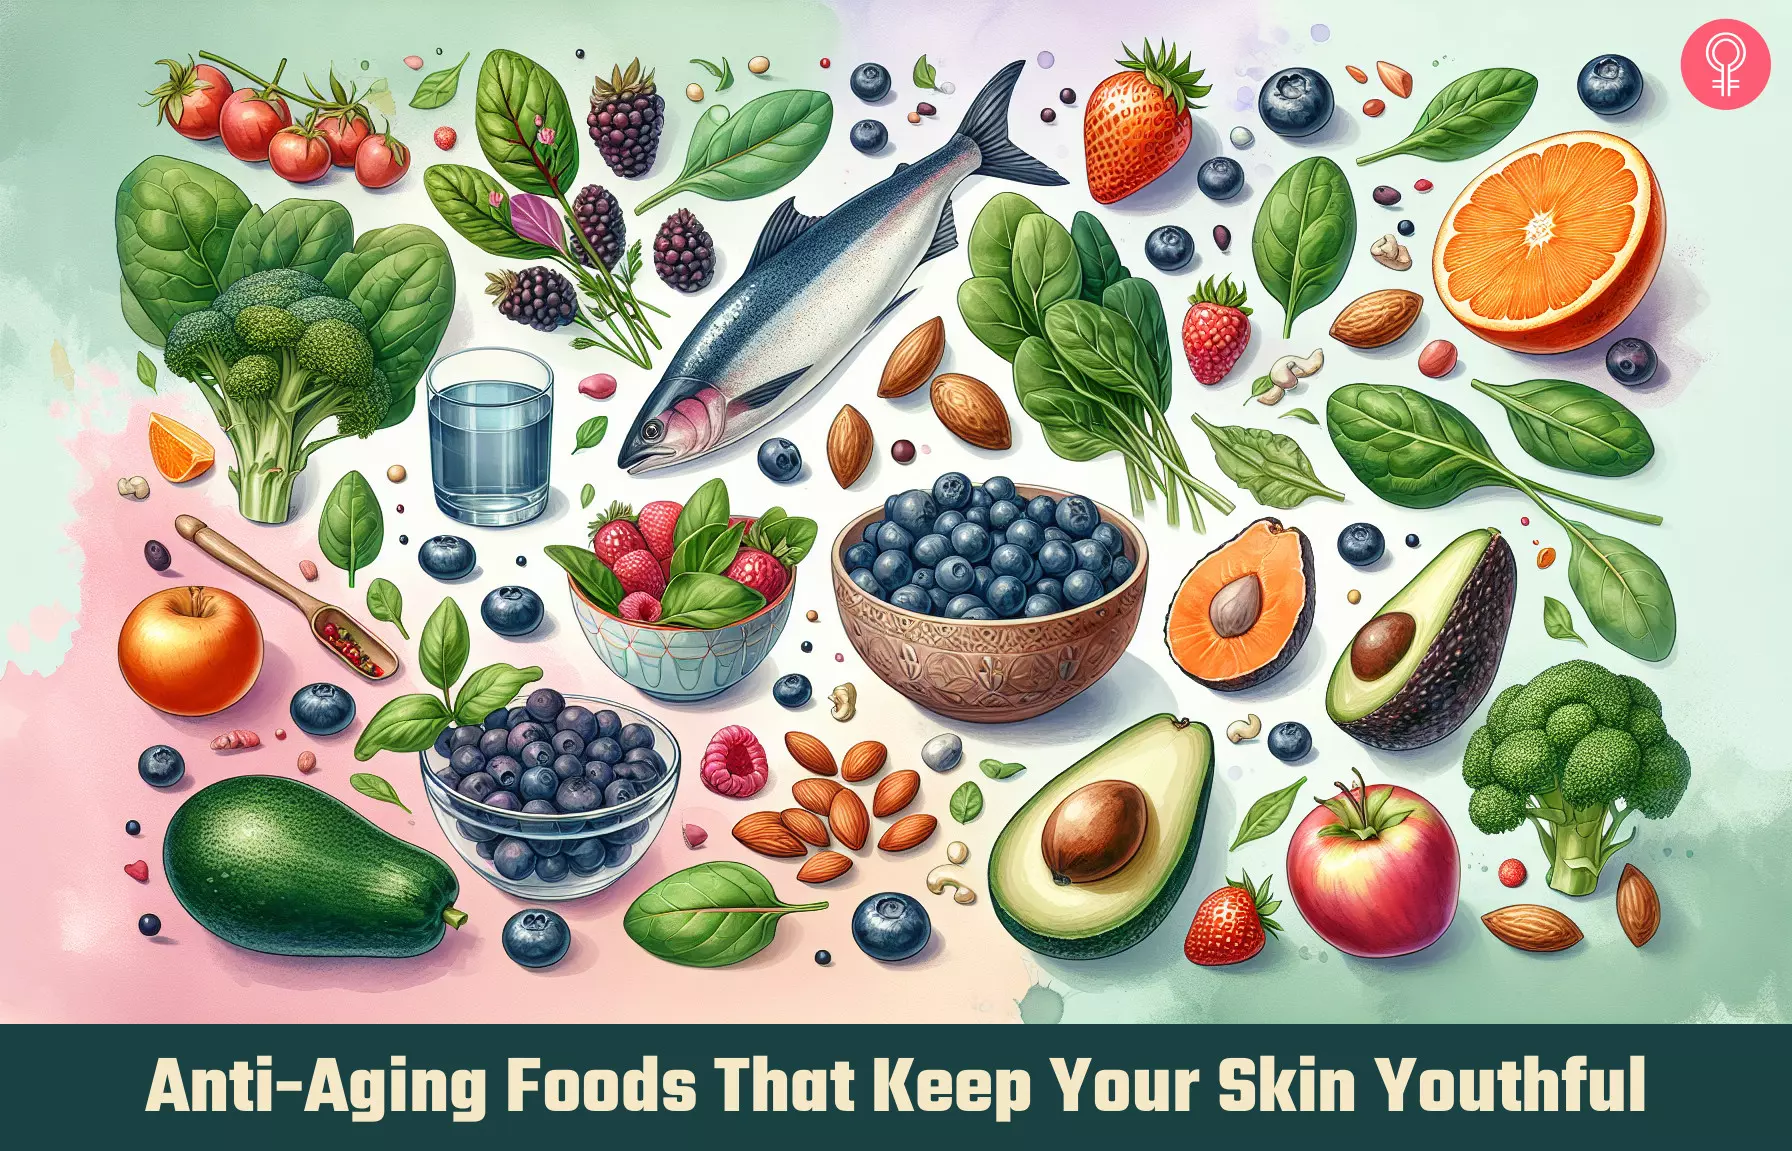 foods for anti-aging skin_illustration